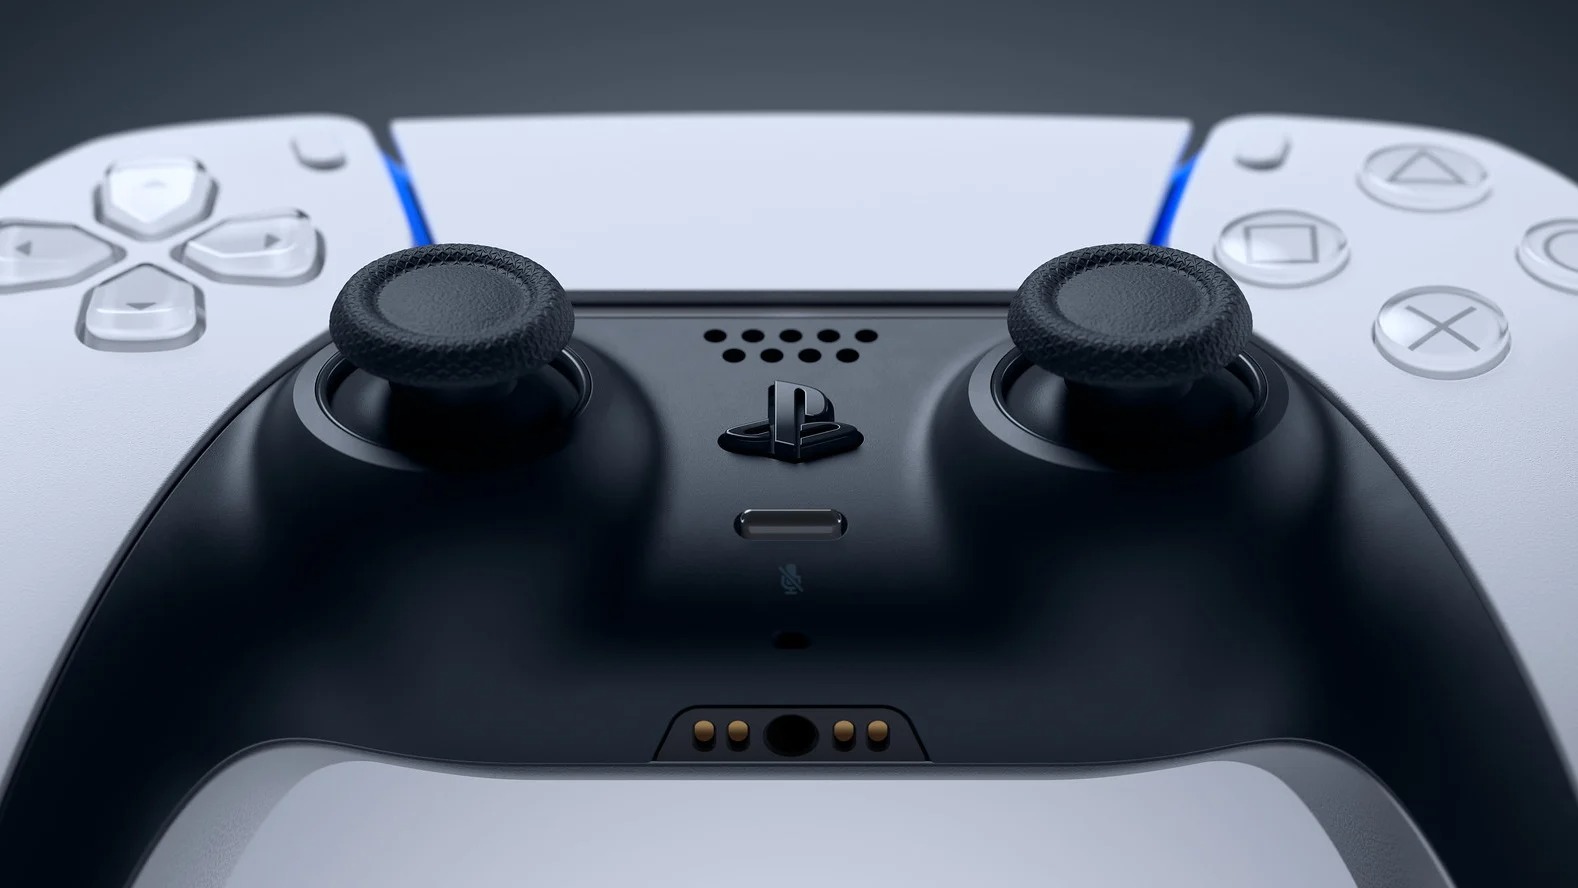 Беспроводной геймпад Sony PlayStation 5 DualSense (Grey Cammo)